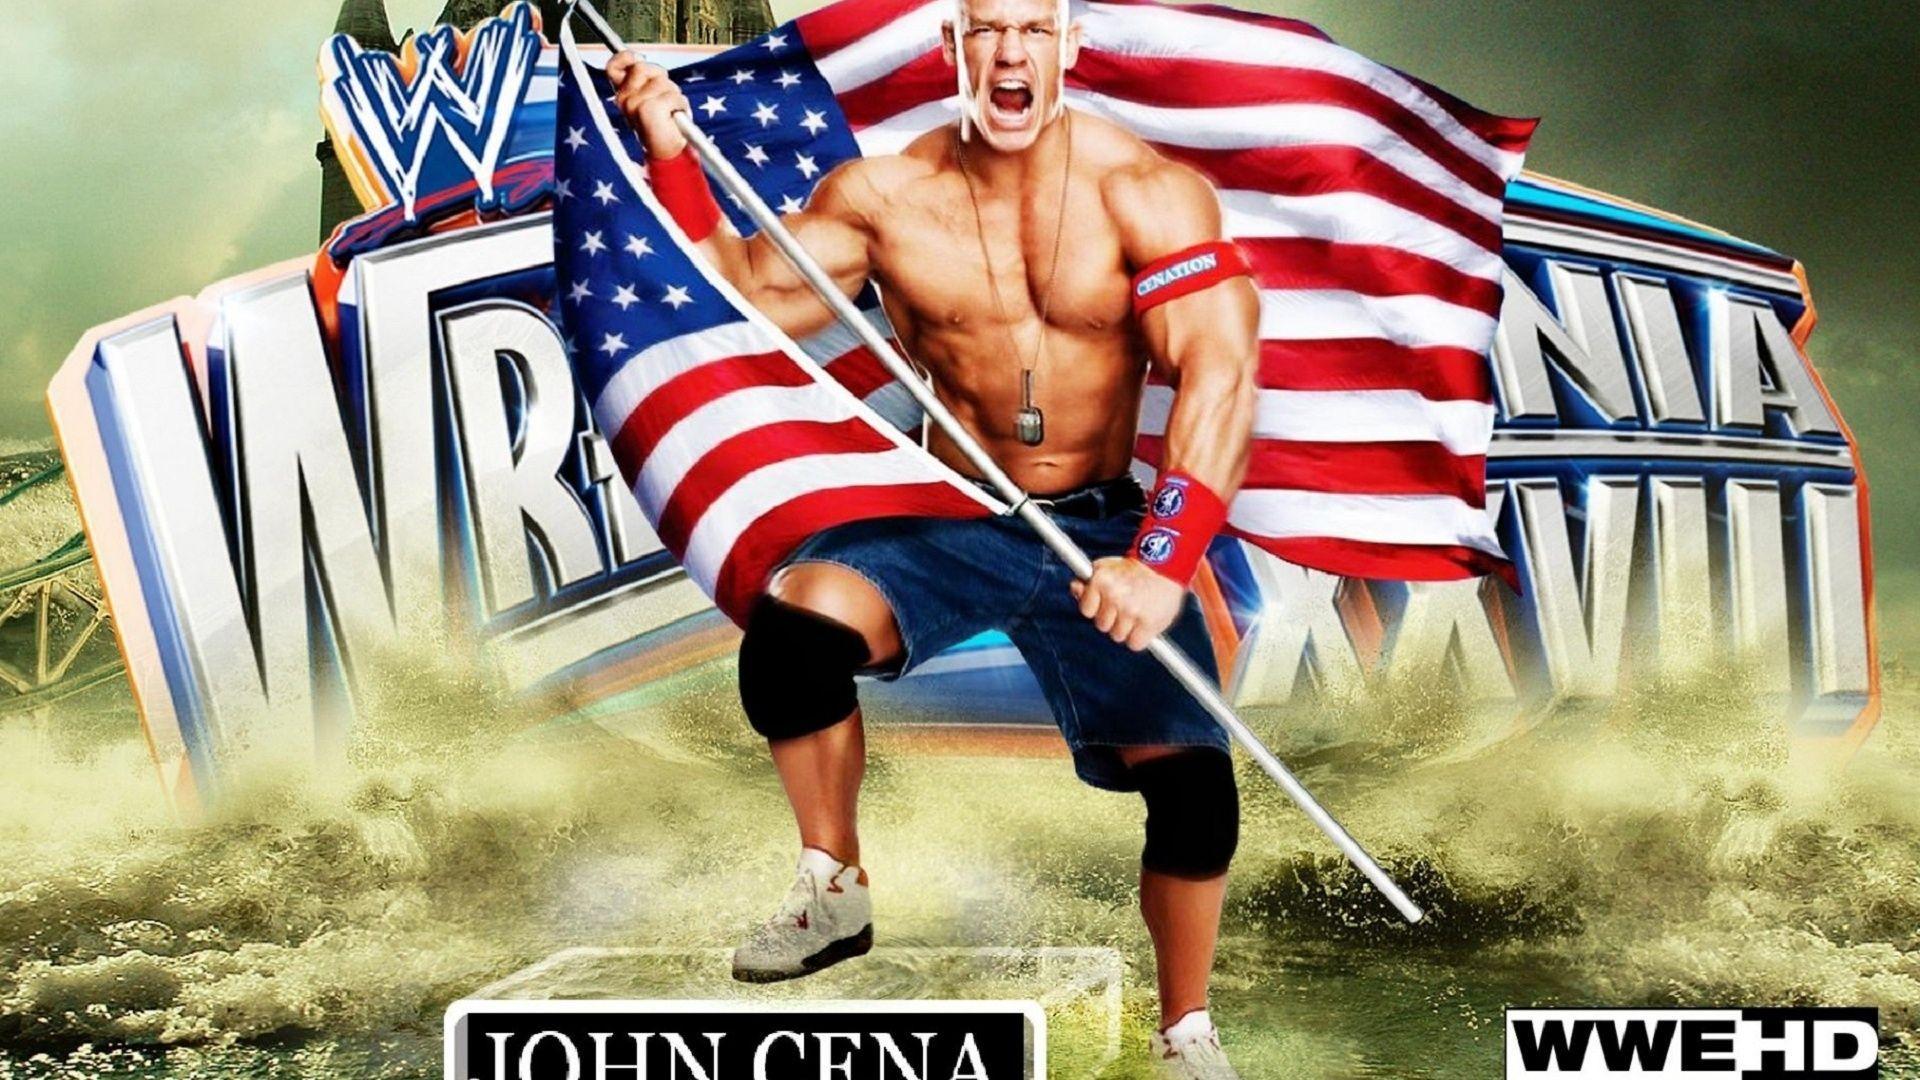 Wwe, Wwf, Wrestling, Us Flag, John Cena, John Cena HD